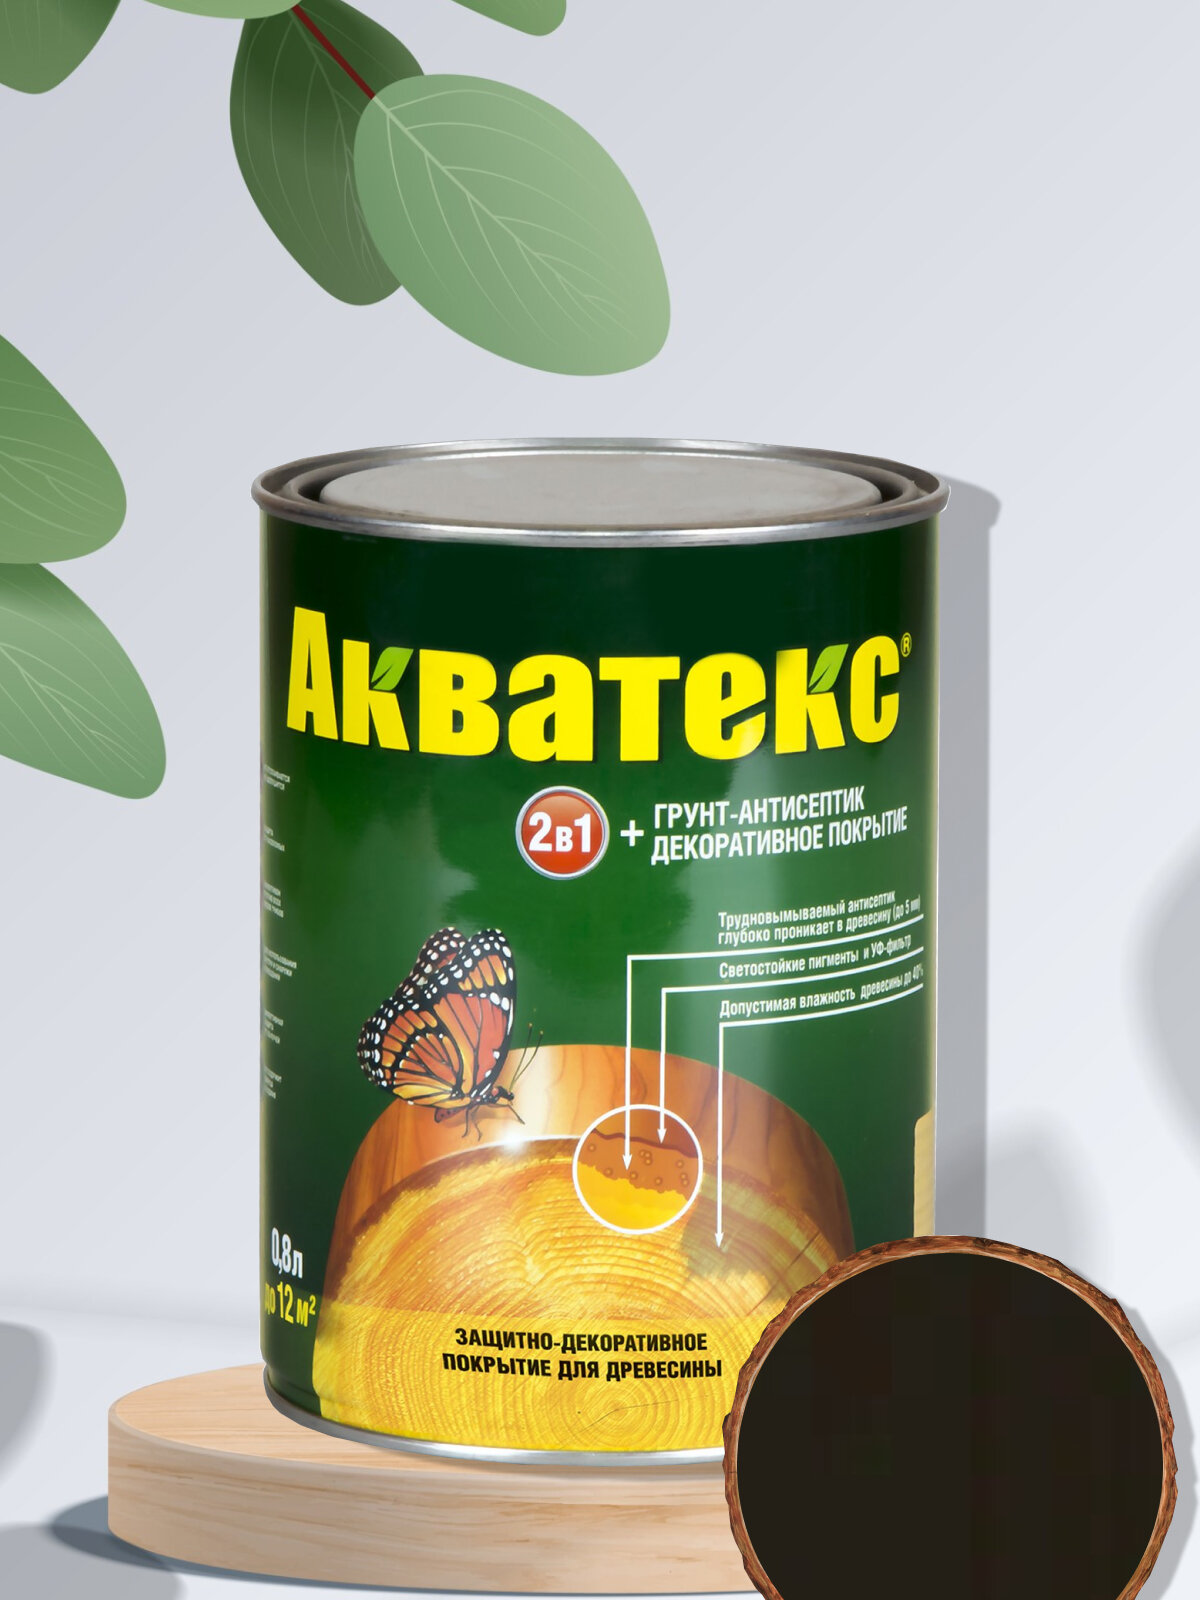 Акватекс" - декоративная пропитка и грунтовка объемом 0,8 литра, цвет "Венге